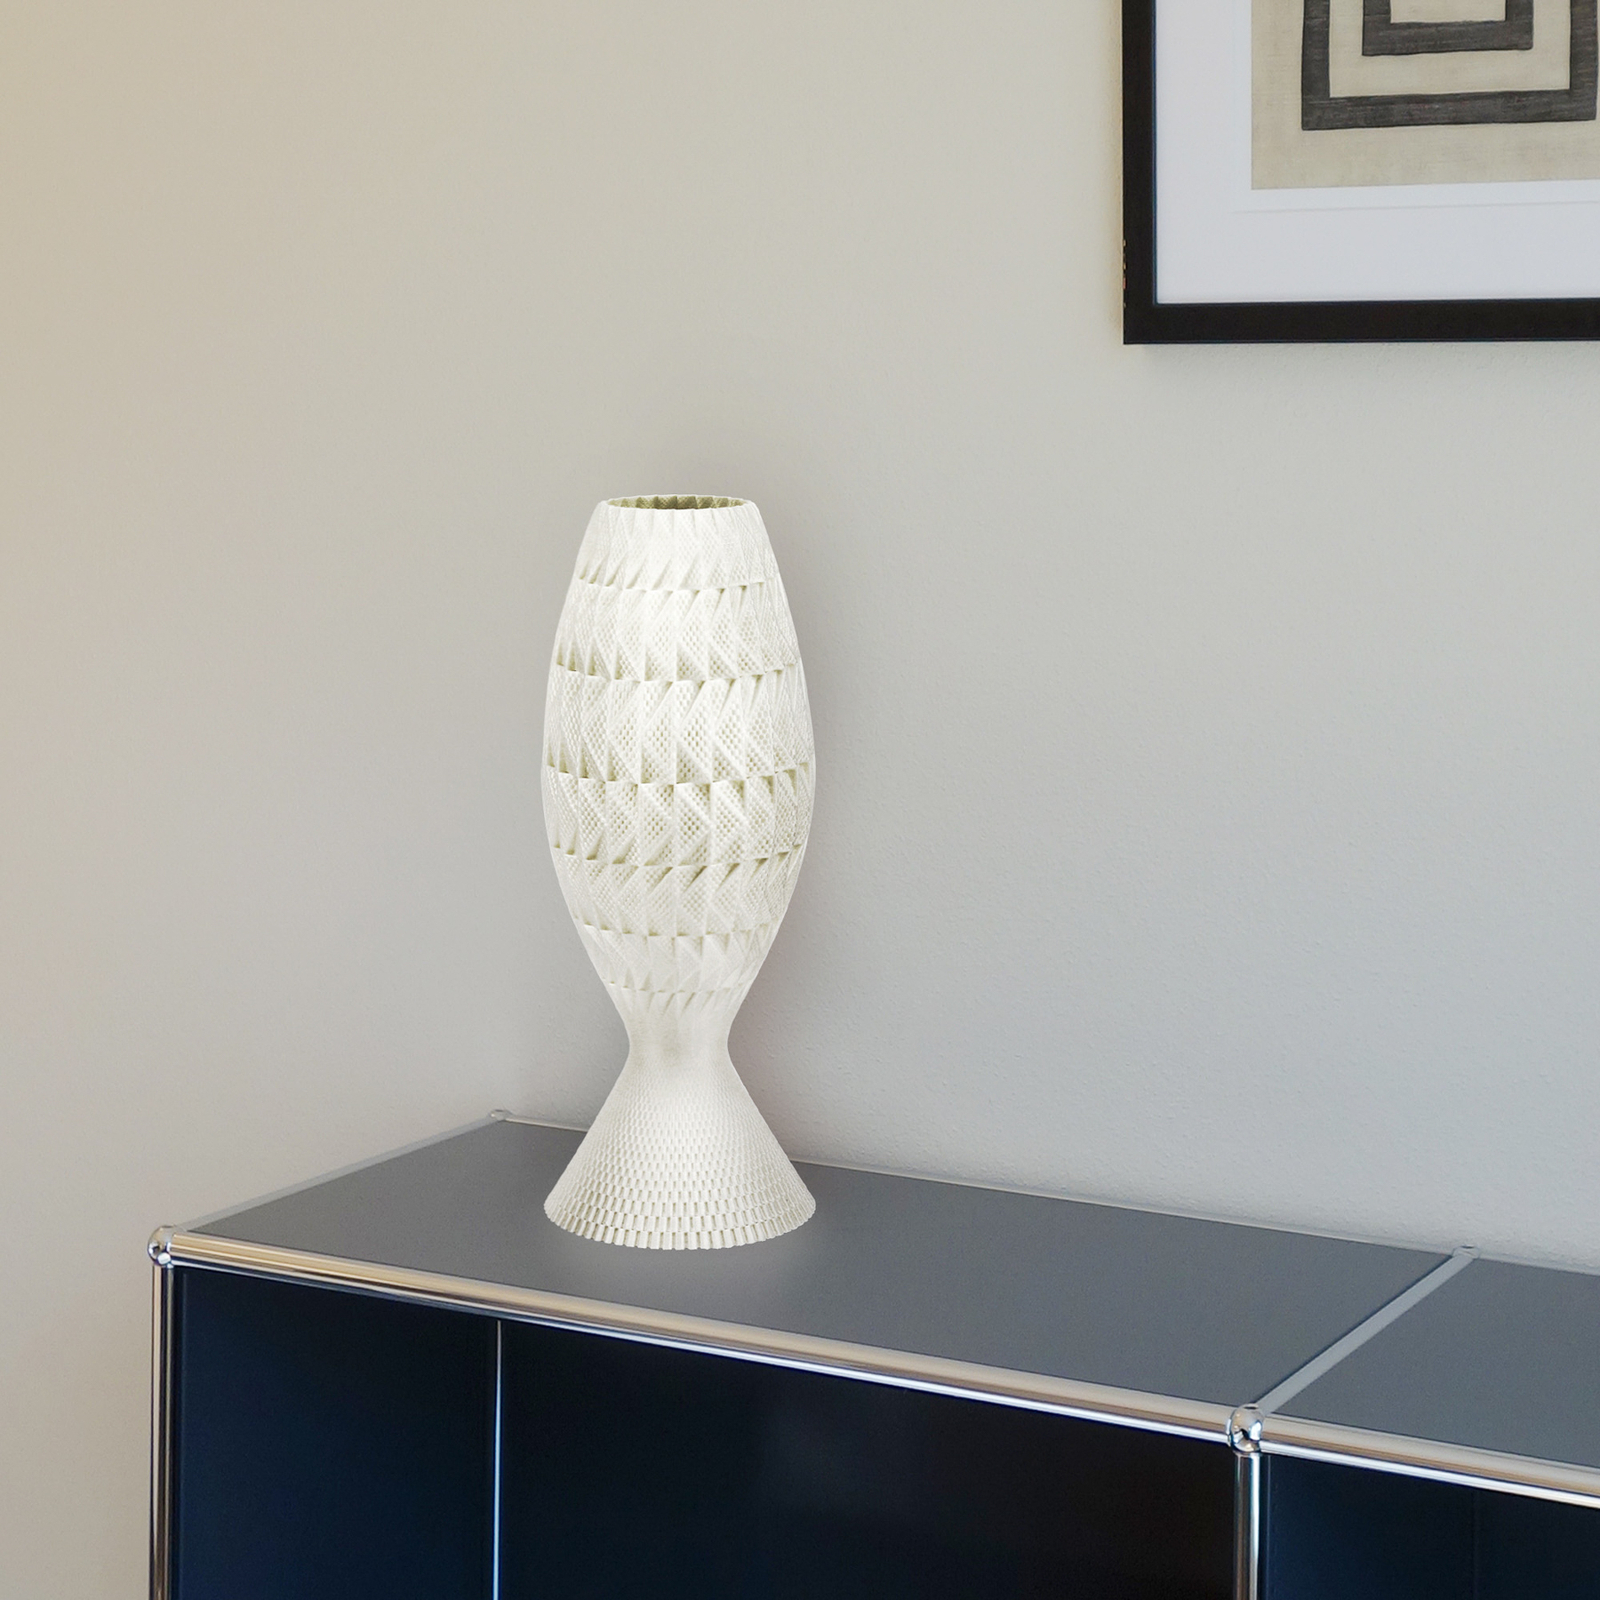 Fraktal bordslampa tillverkad av biomaterial, silke, 33 cm